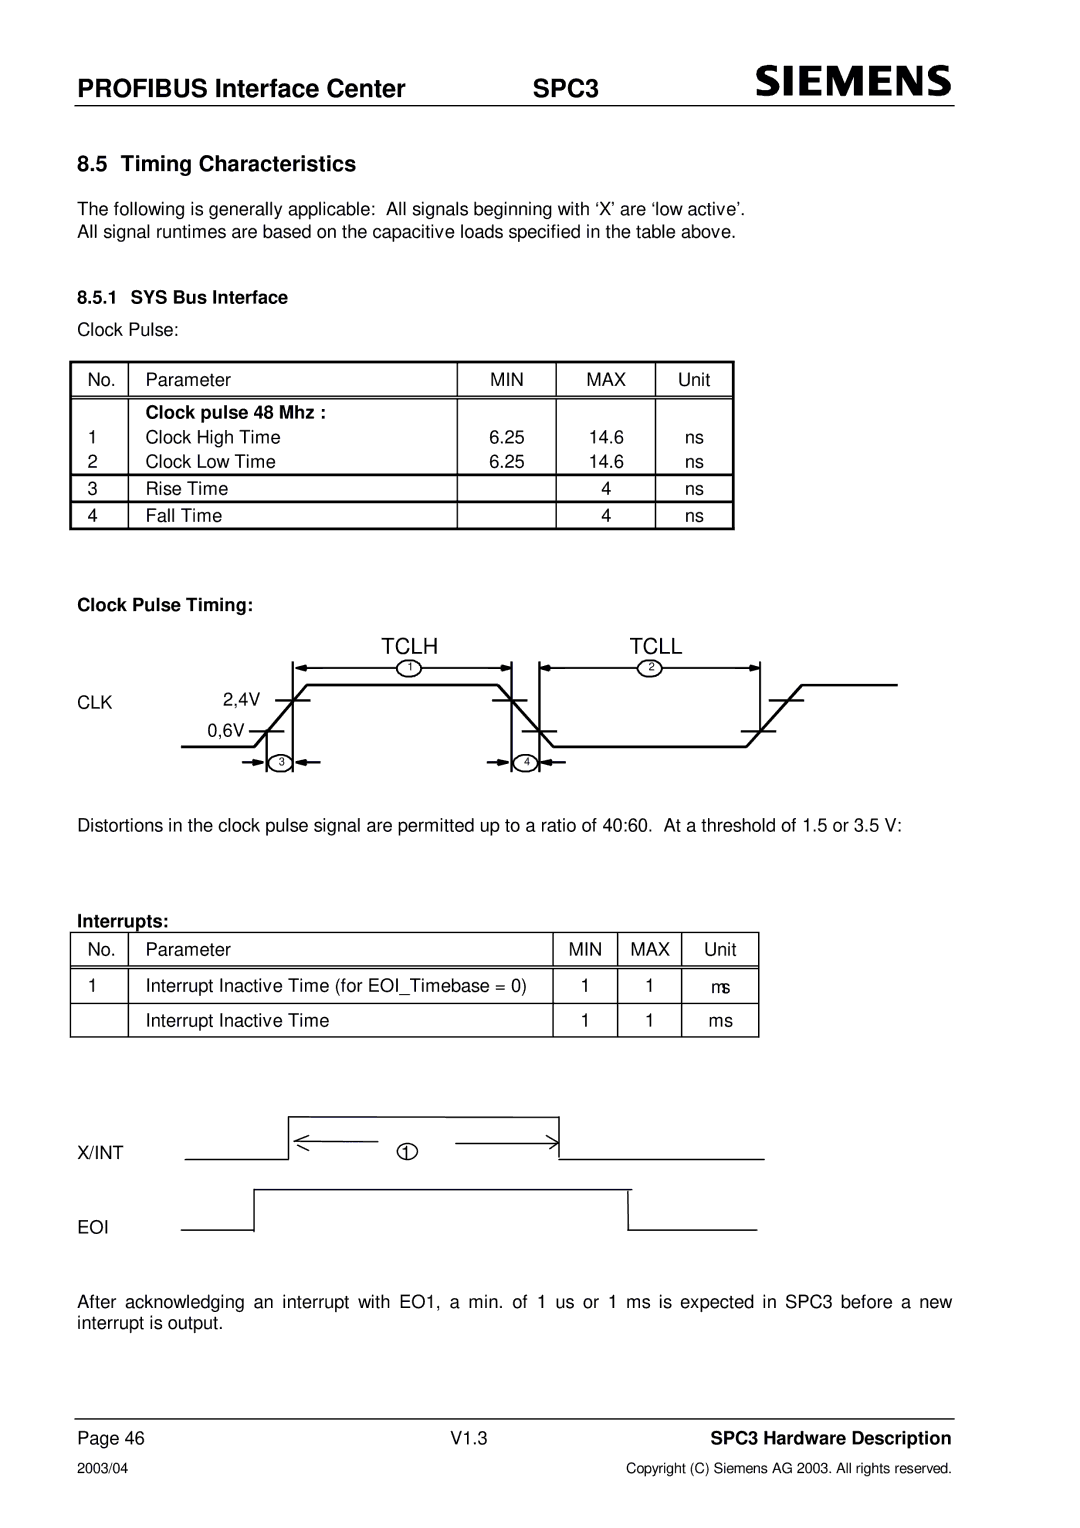 Siemens SPC3 manual Timing Characteristics, SYS Bus Interface, Clock pulse 48 Mhz, Clock Pulse Timing, Interrupts 